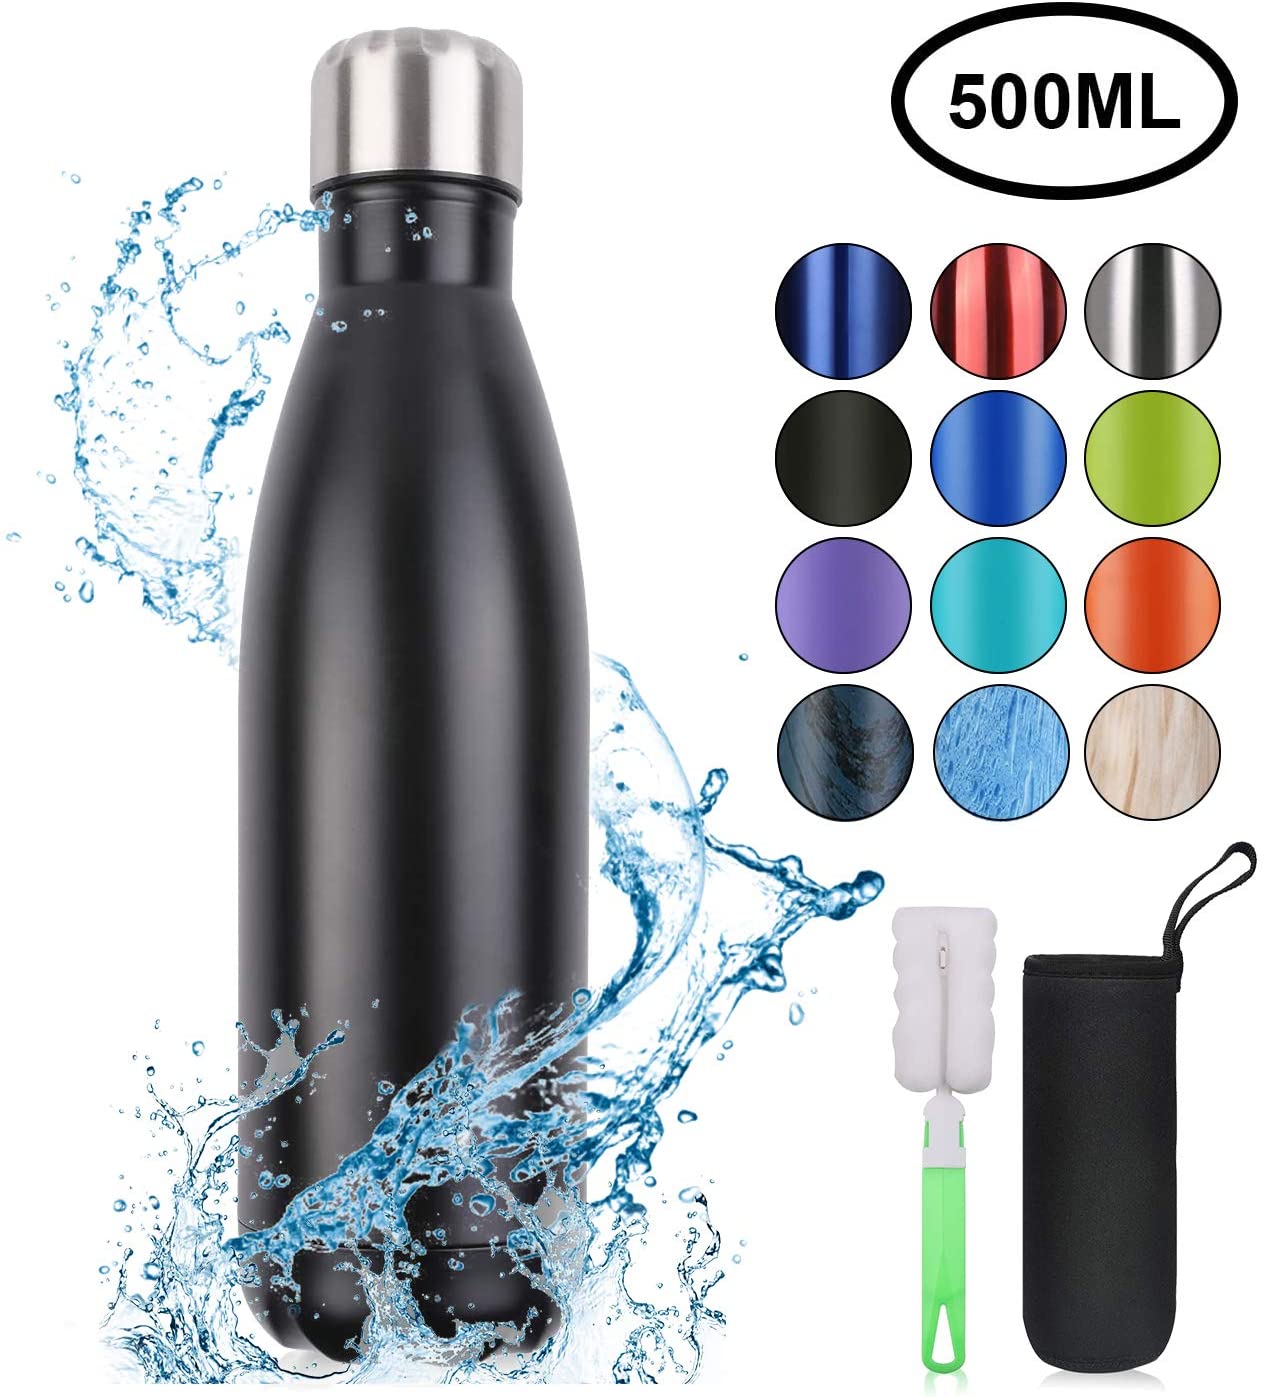 flintronic Stainless Steel Water Bottle,500ml Double Walled Vacuum